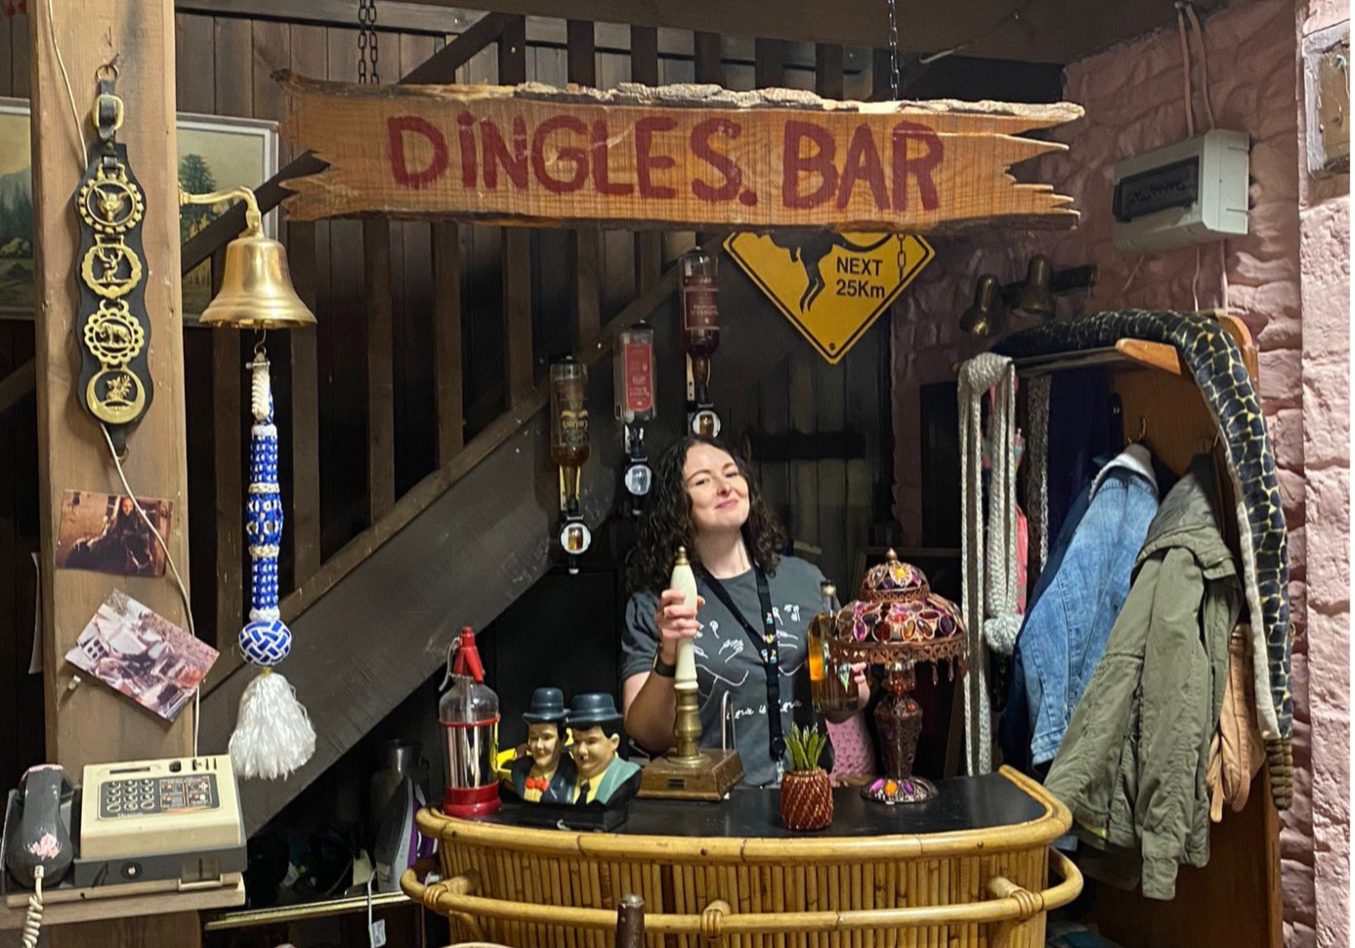 Chloe at the Dingle’s Bar